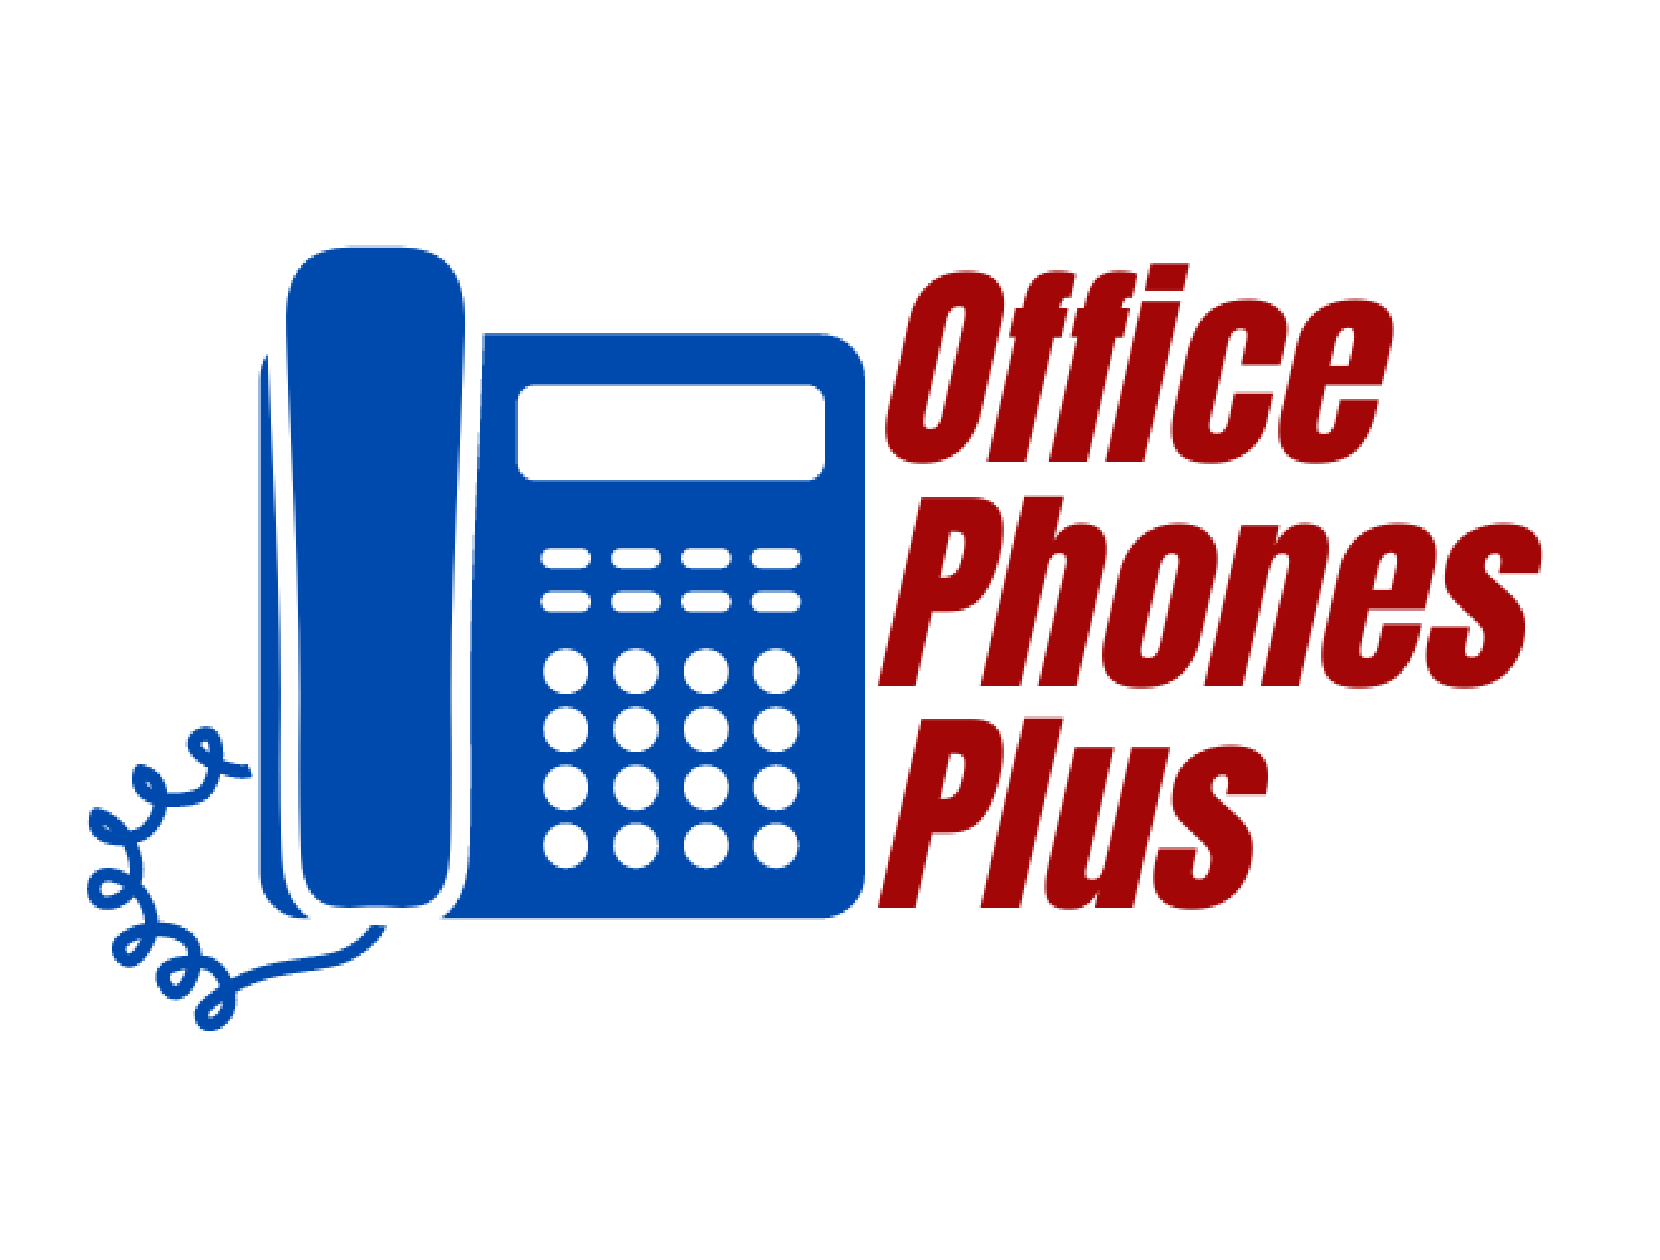 Office Phones Plus.png